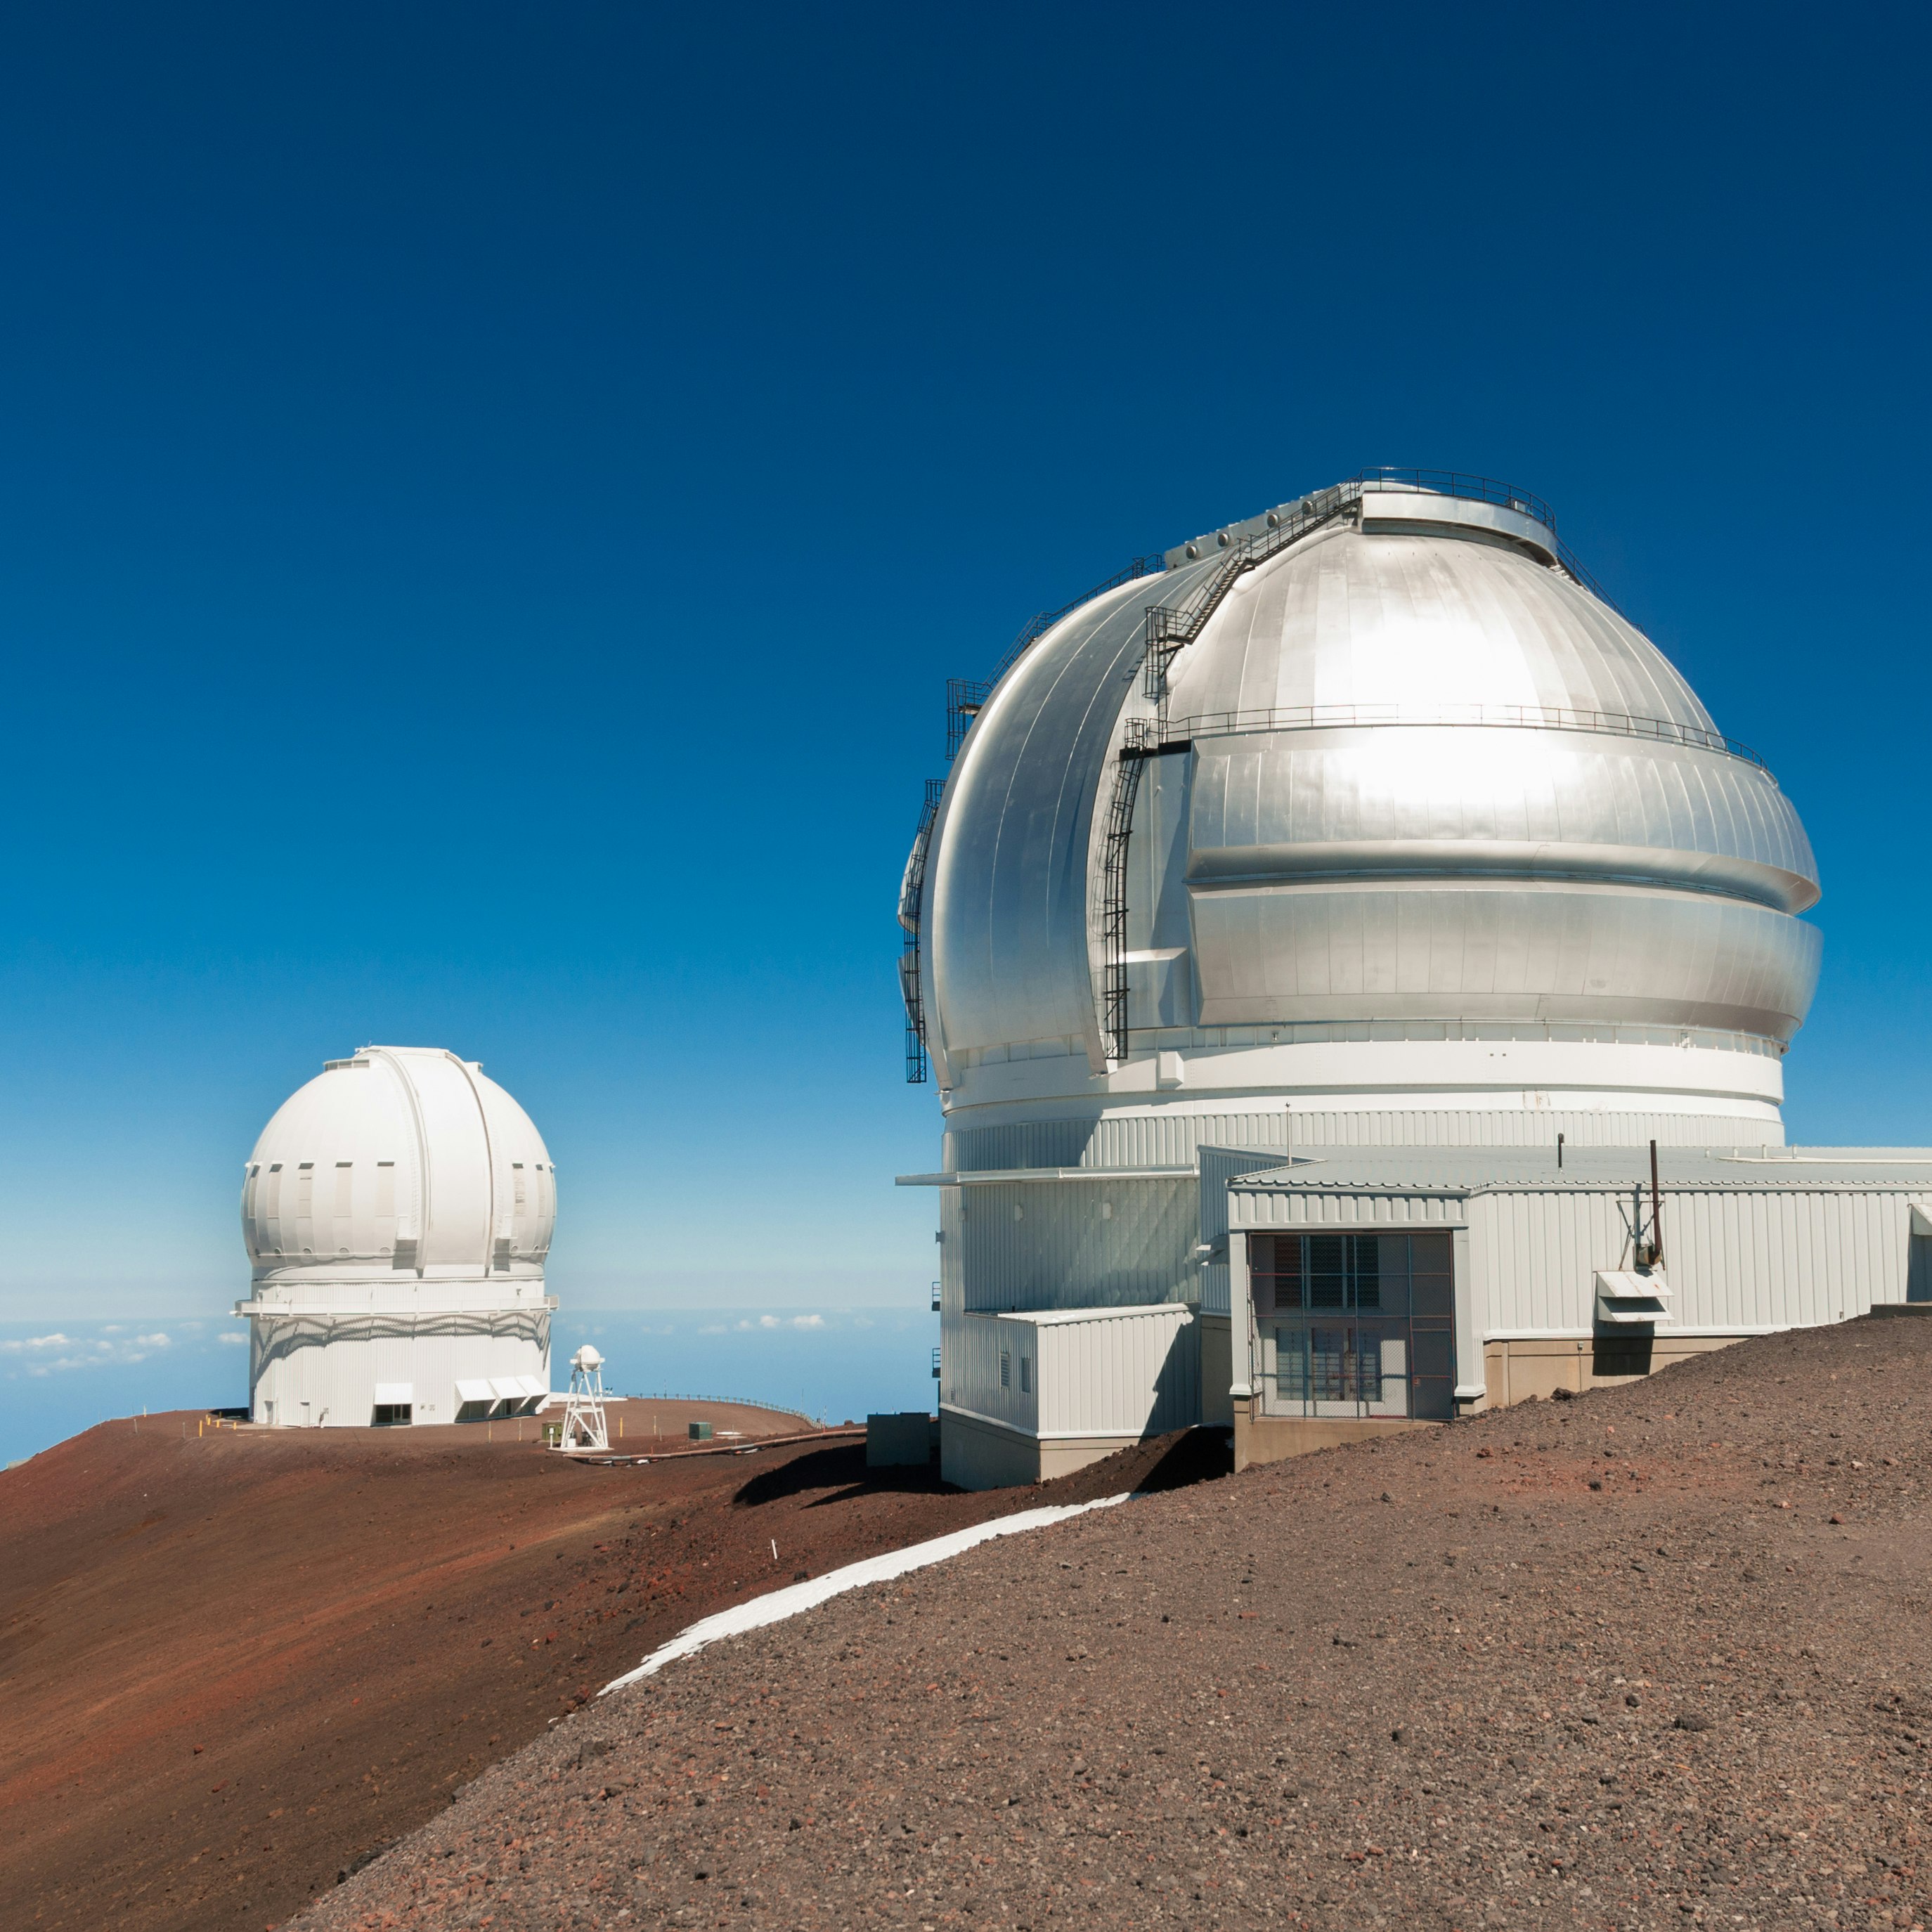 Gemini North Observatory on top of Mauna Kea mountain peak on Big Island of Hawaii, United States with deep blue sky and volcanic landscape.
1327459248